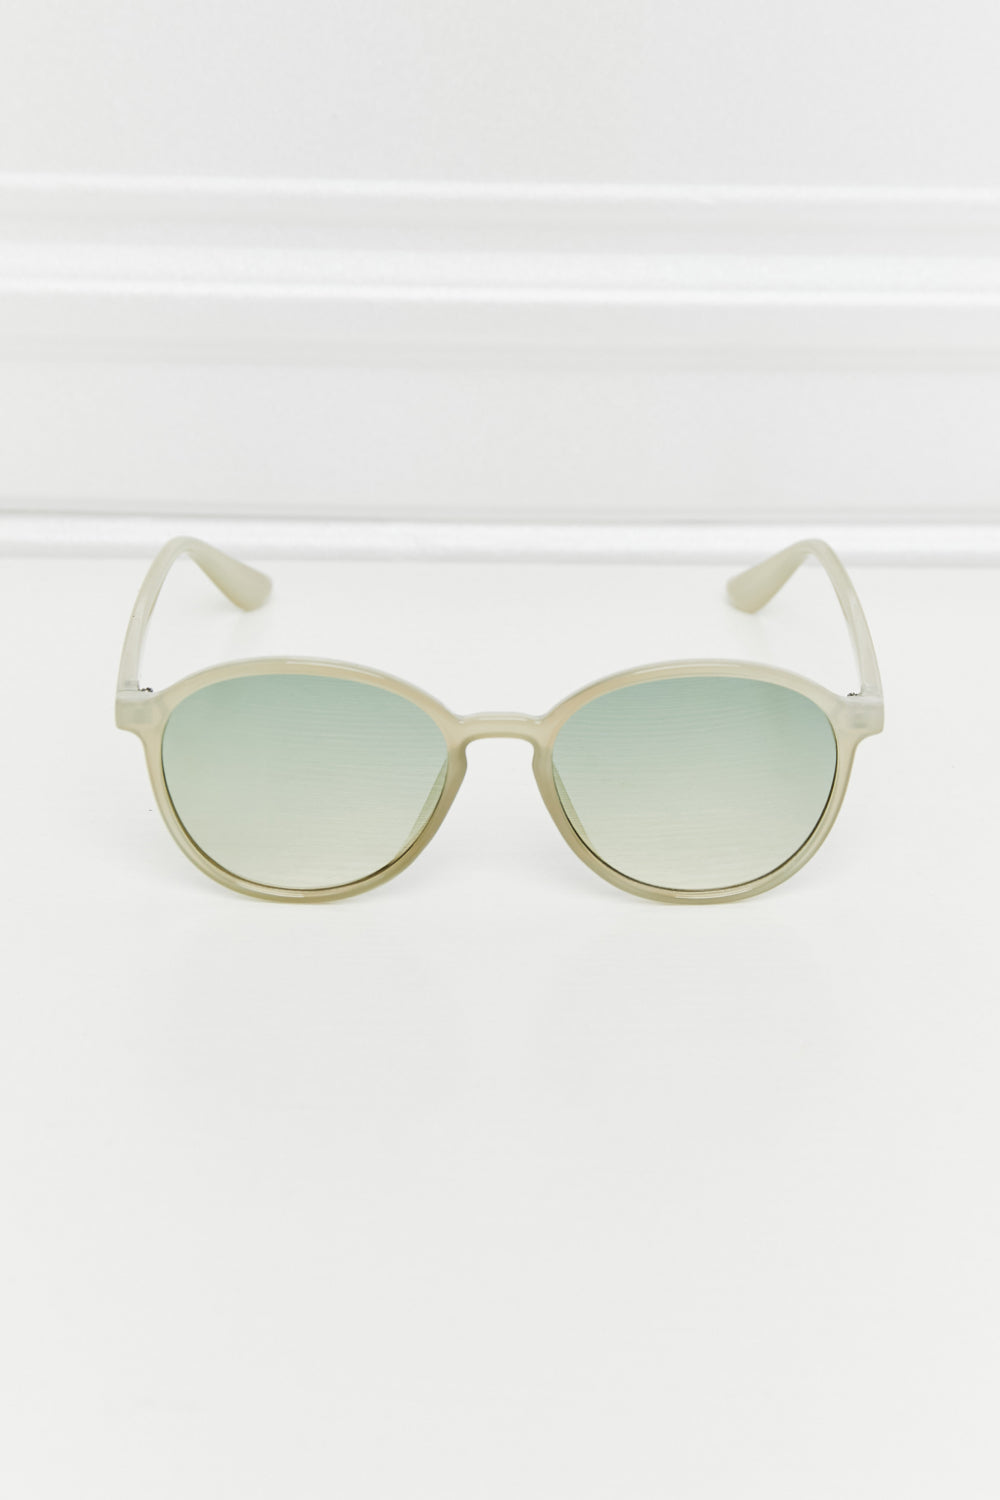 Lavender Nature Full Rim Polycarbonate Frame Sunglasses Sunglasses